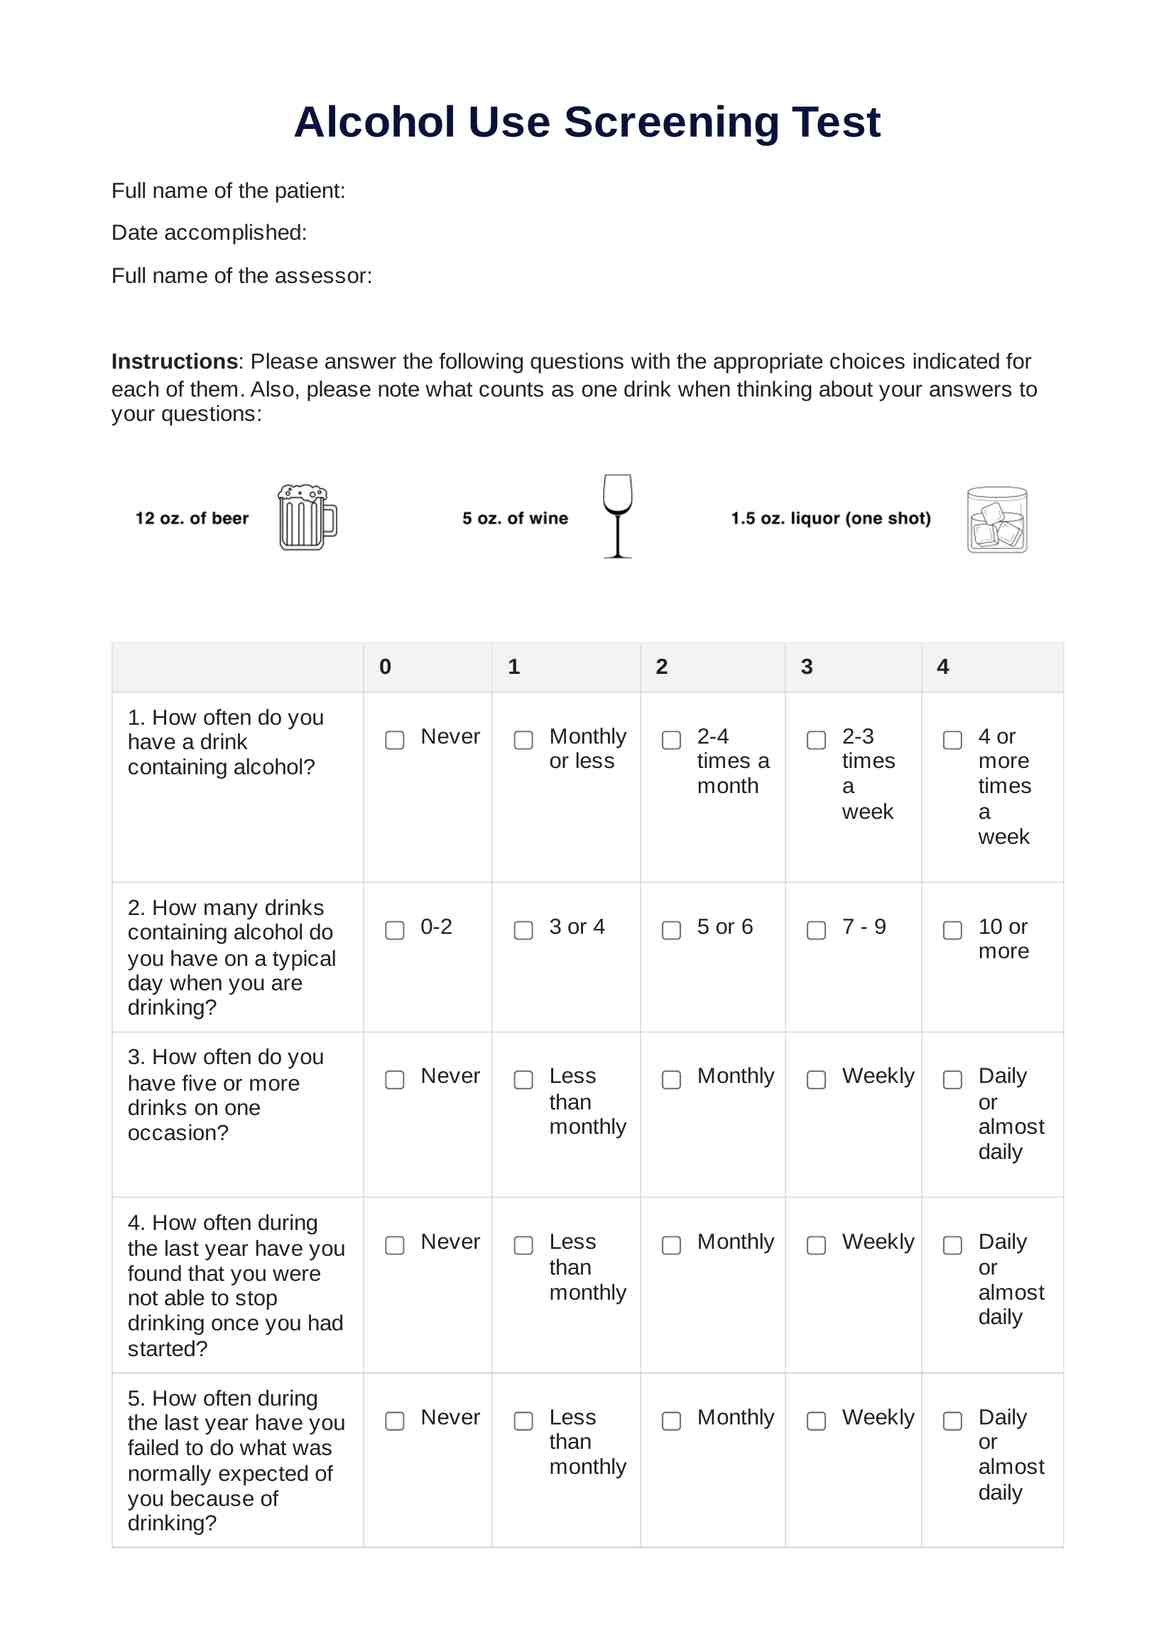 Alcohol Use Screening PDF Example